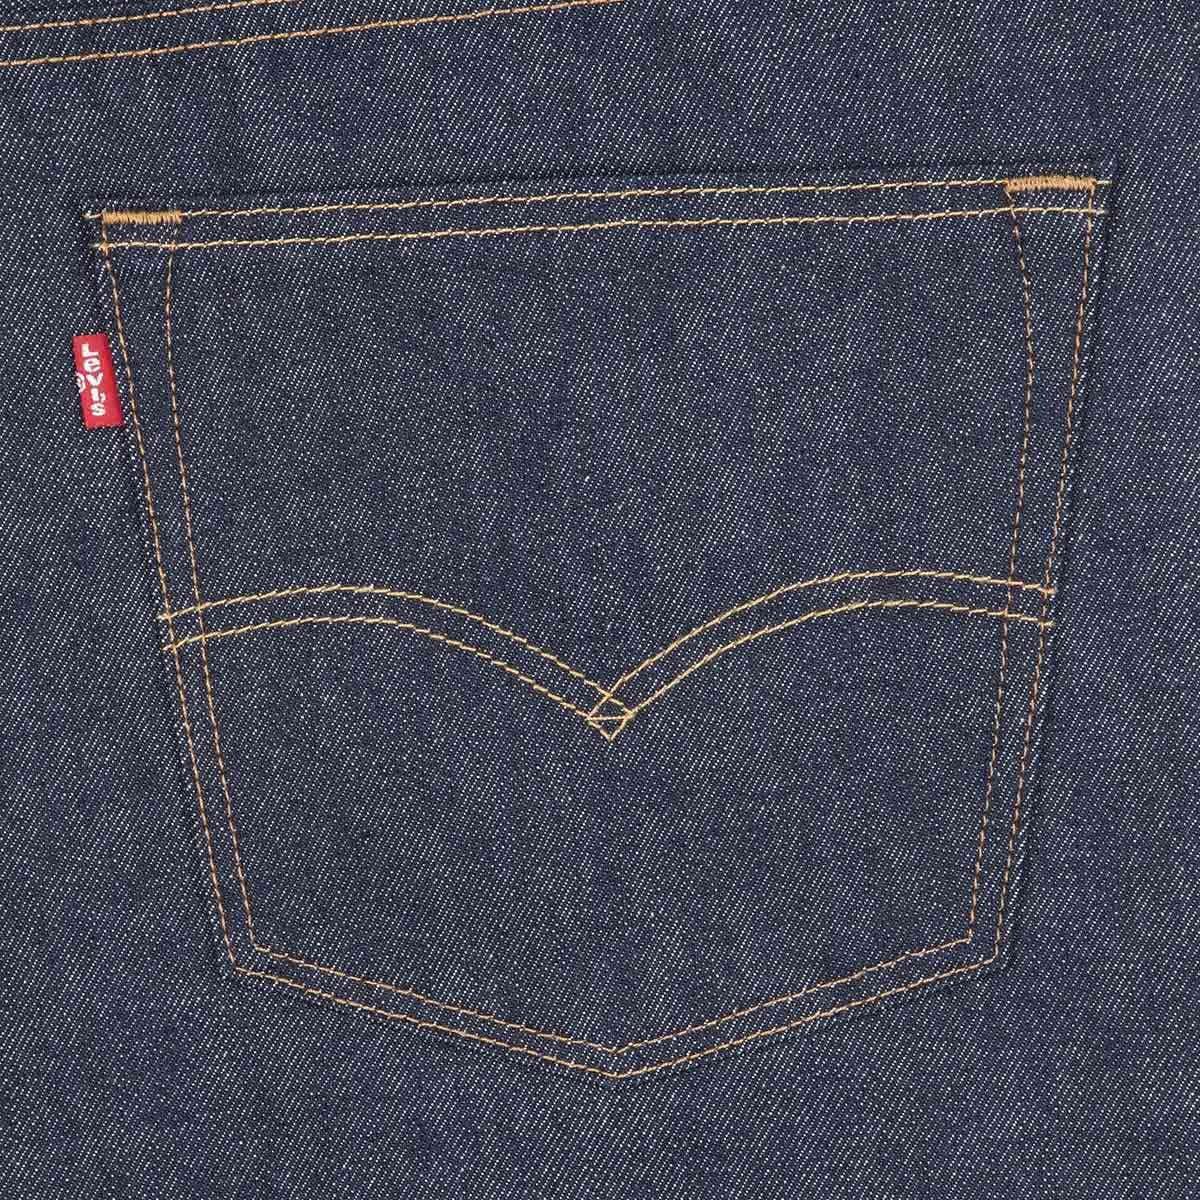 Jeans 501Recto B&amp;t Levi&acute;s para Caballero